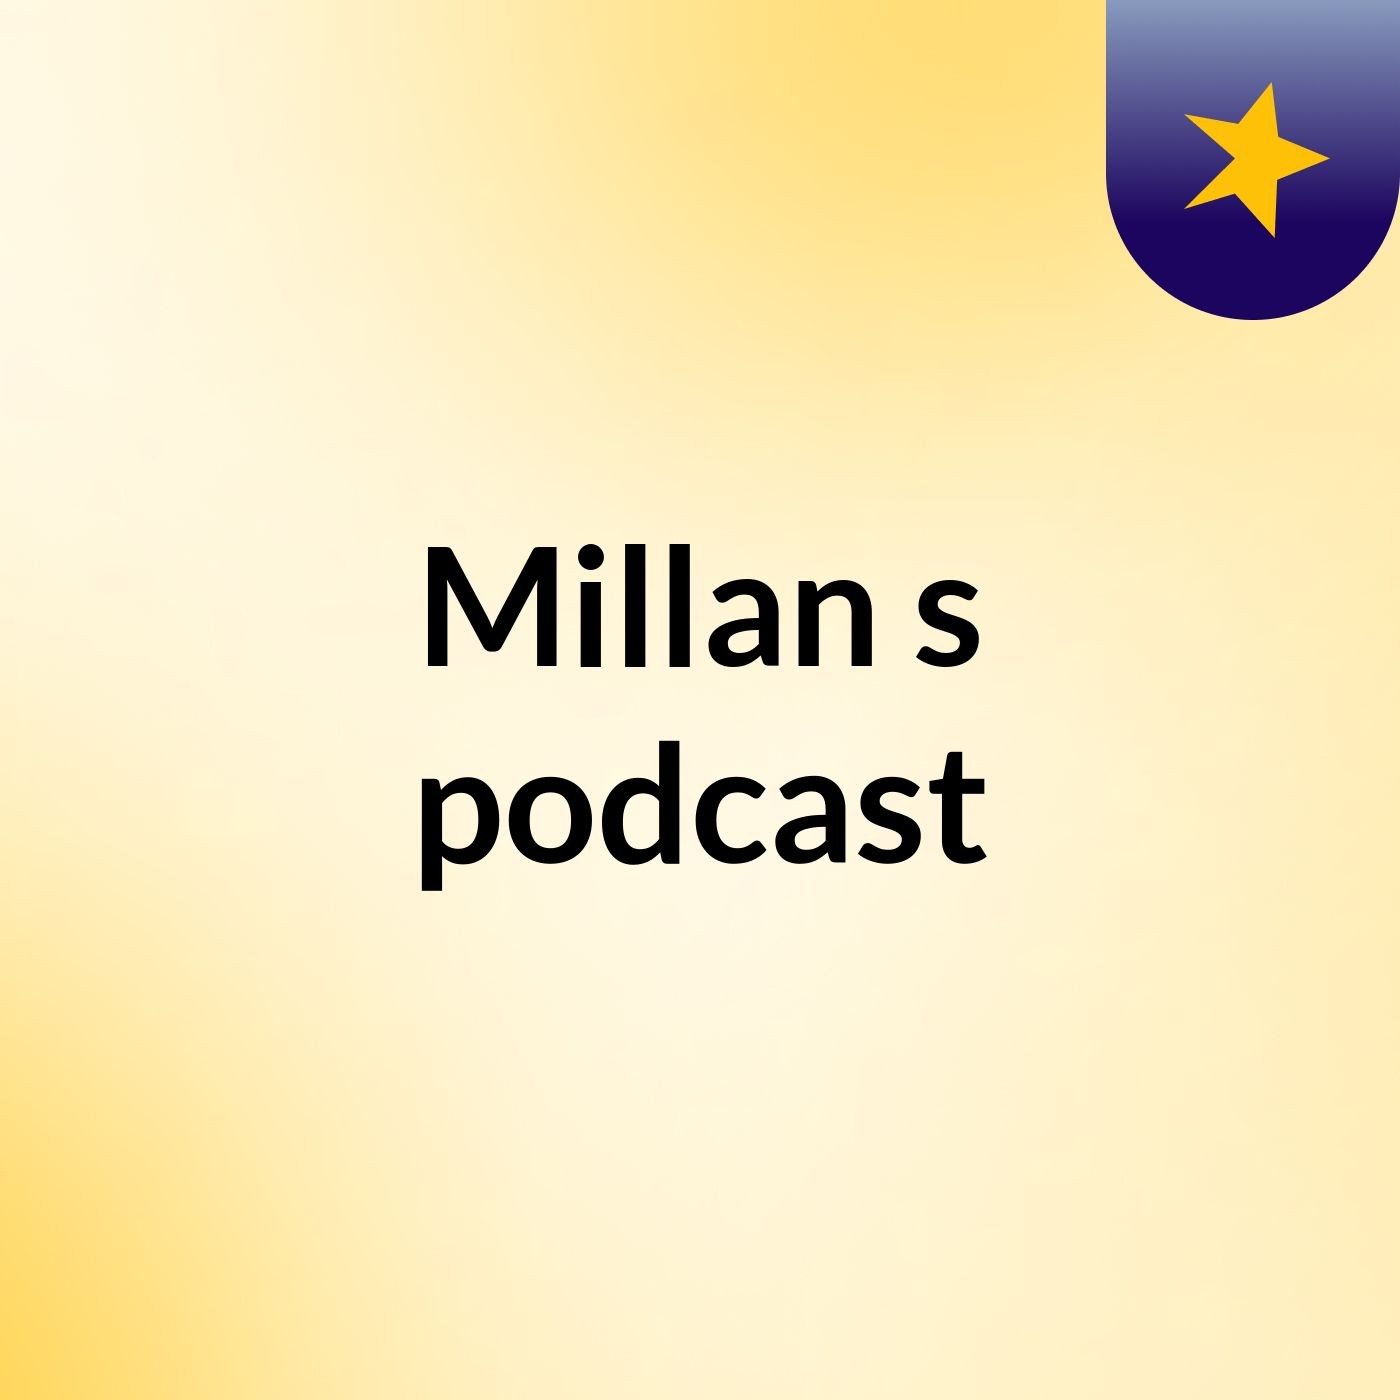 Millan's podcast